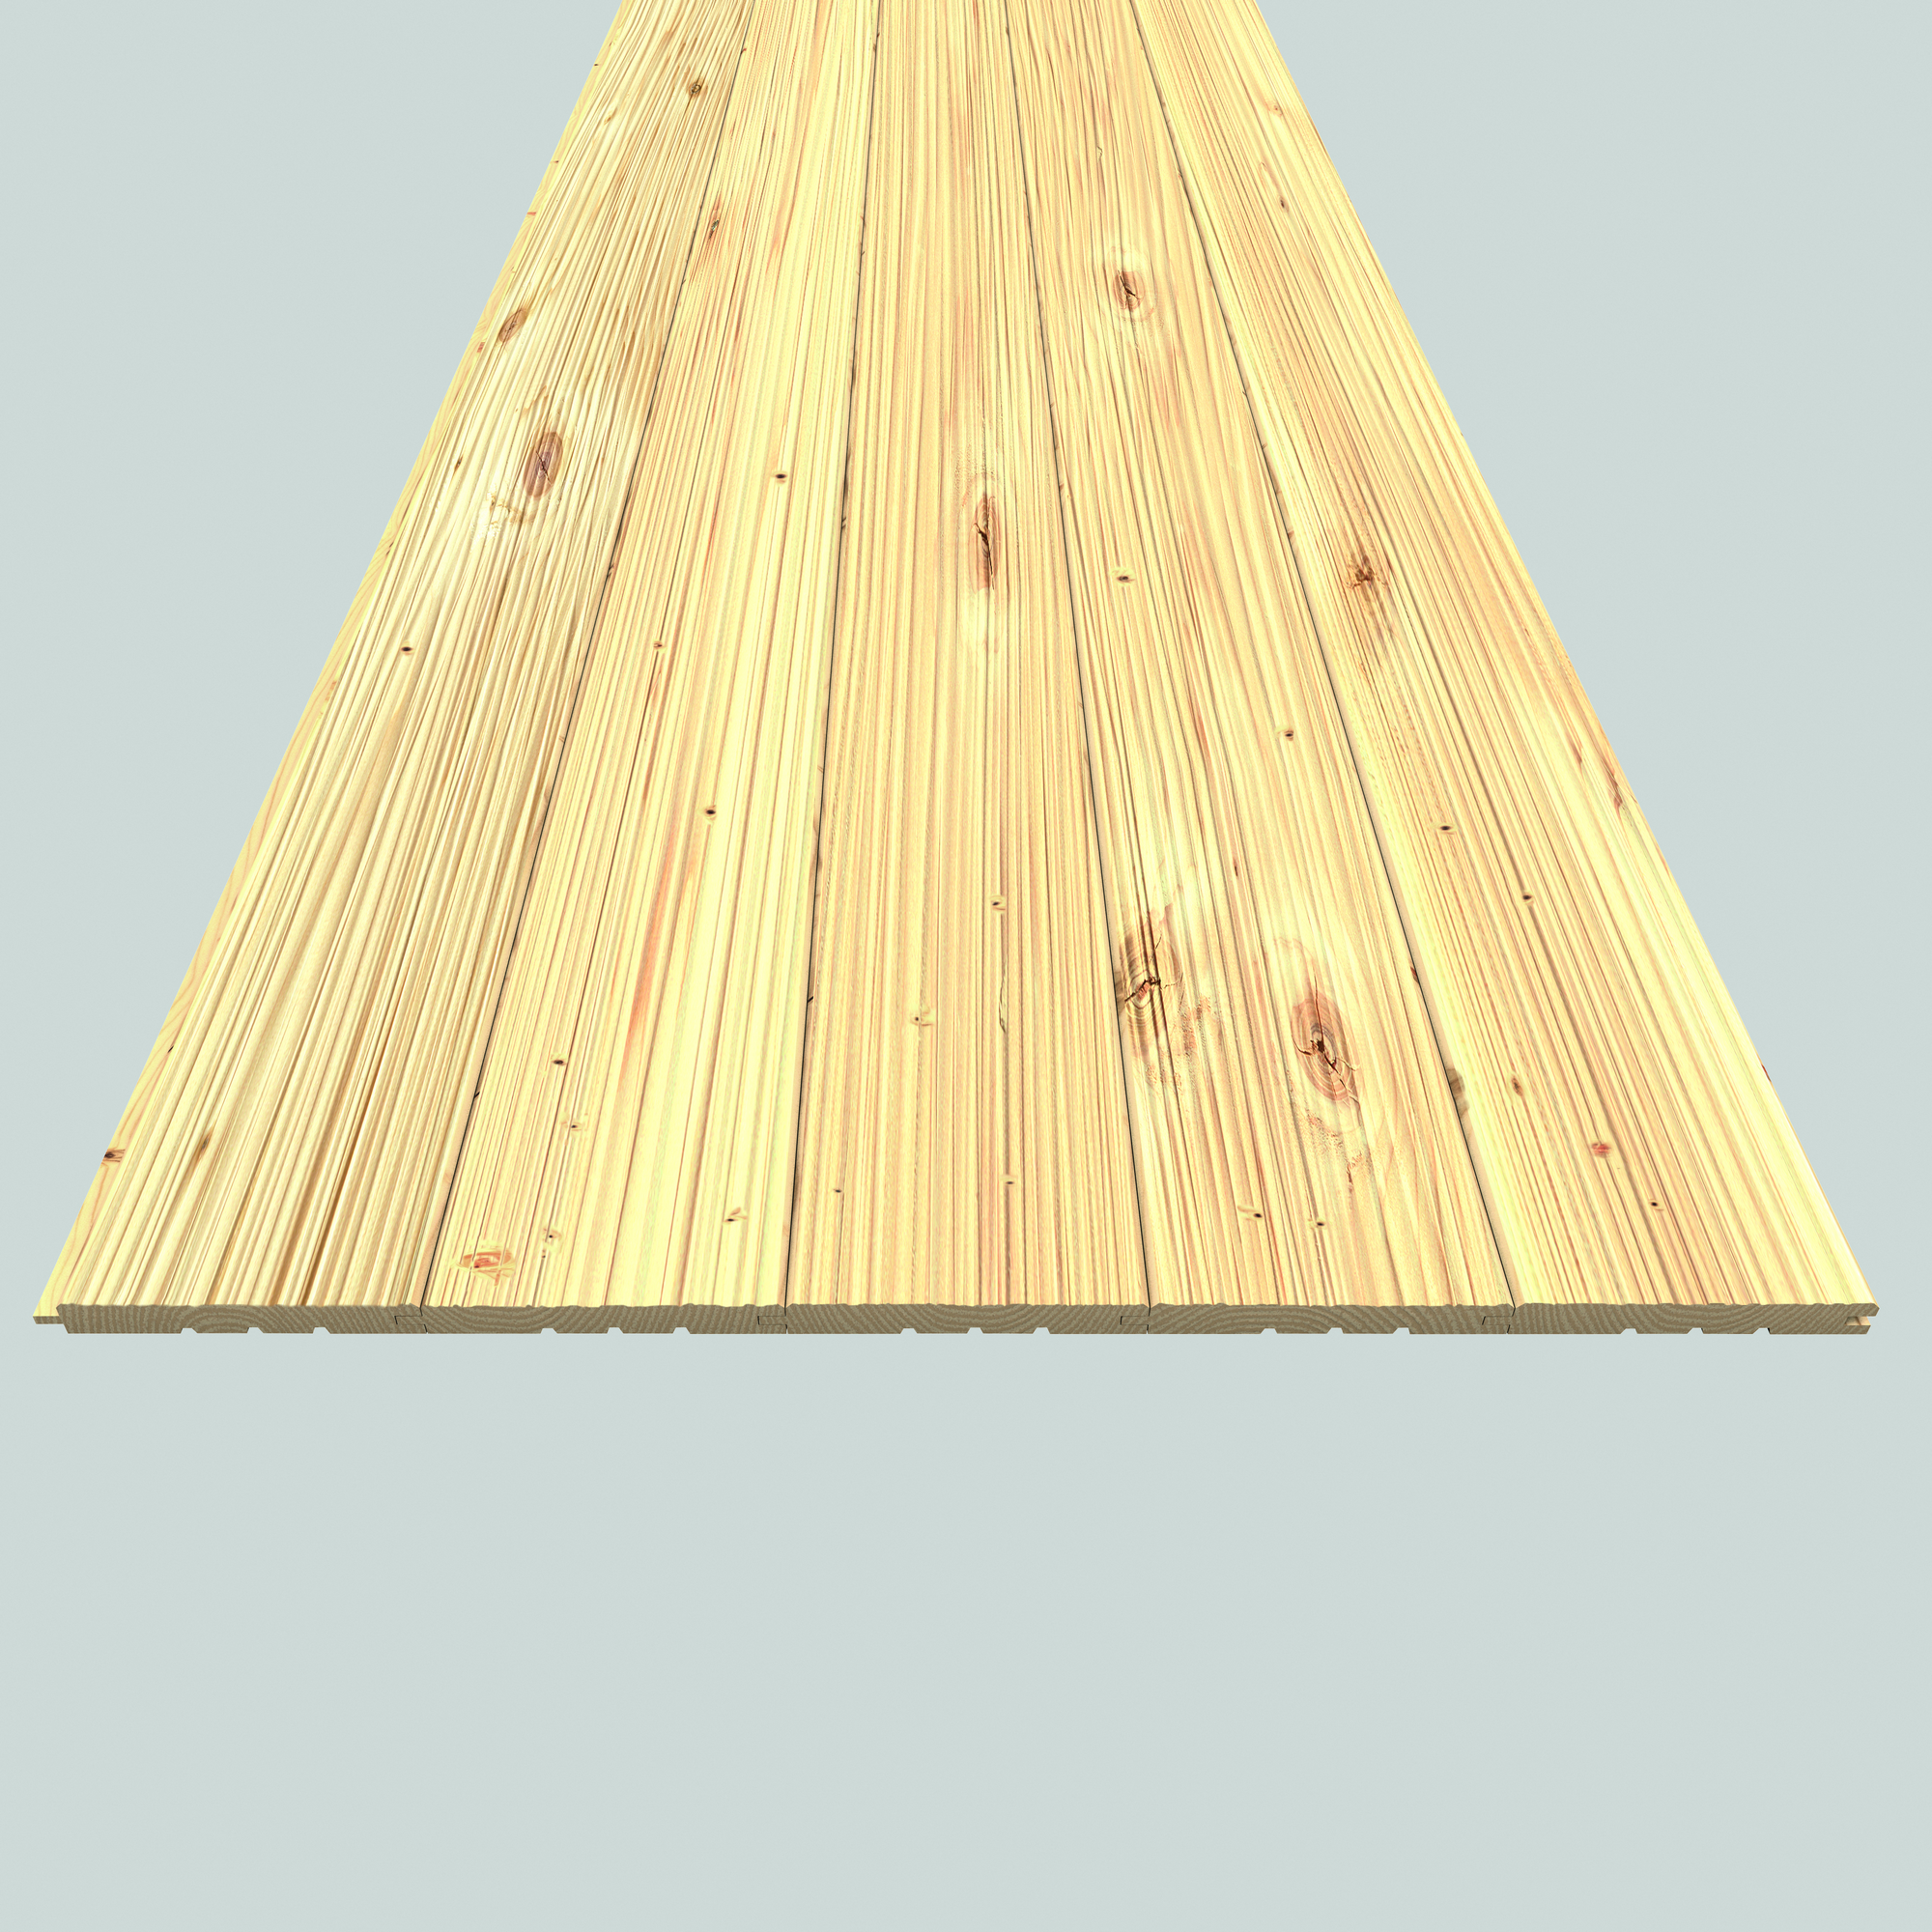 Profilholz Struktur gehobelt + product picture